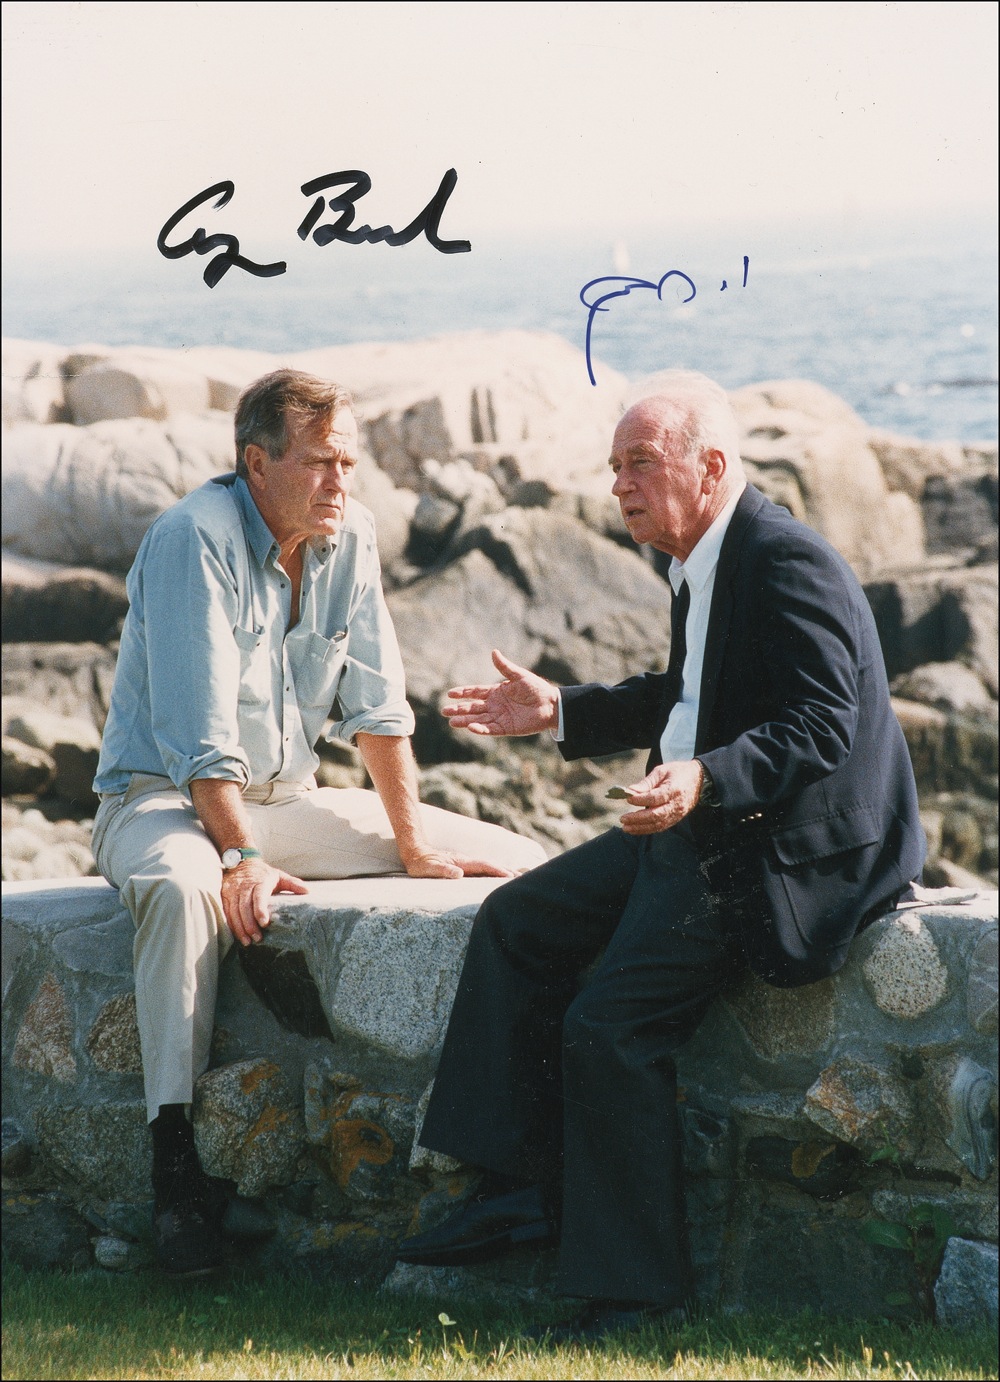 Lot #8 George Bush and Yitzhak Rabin